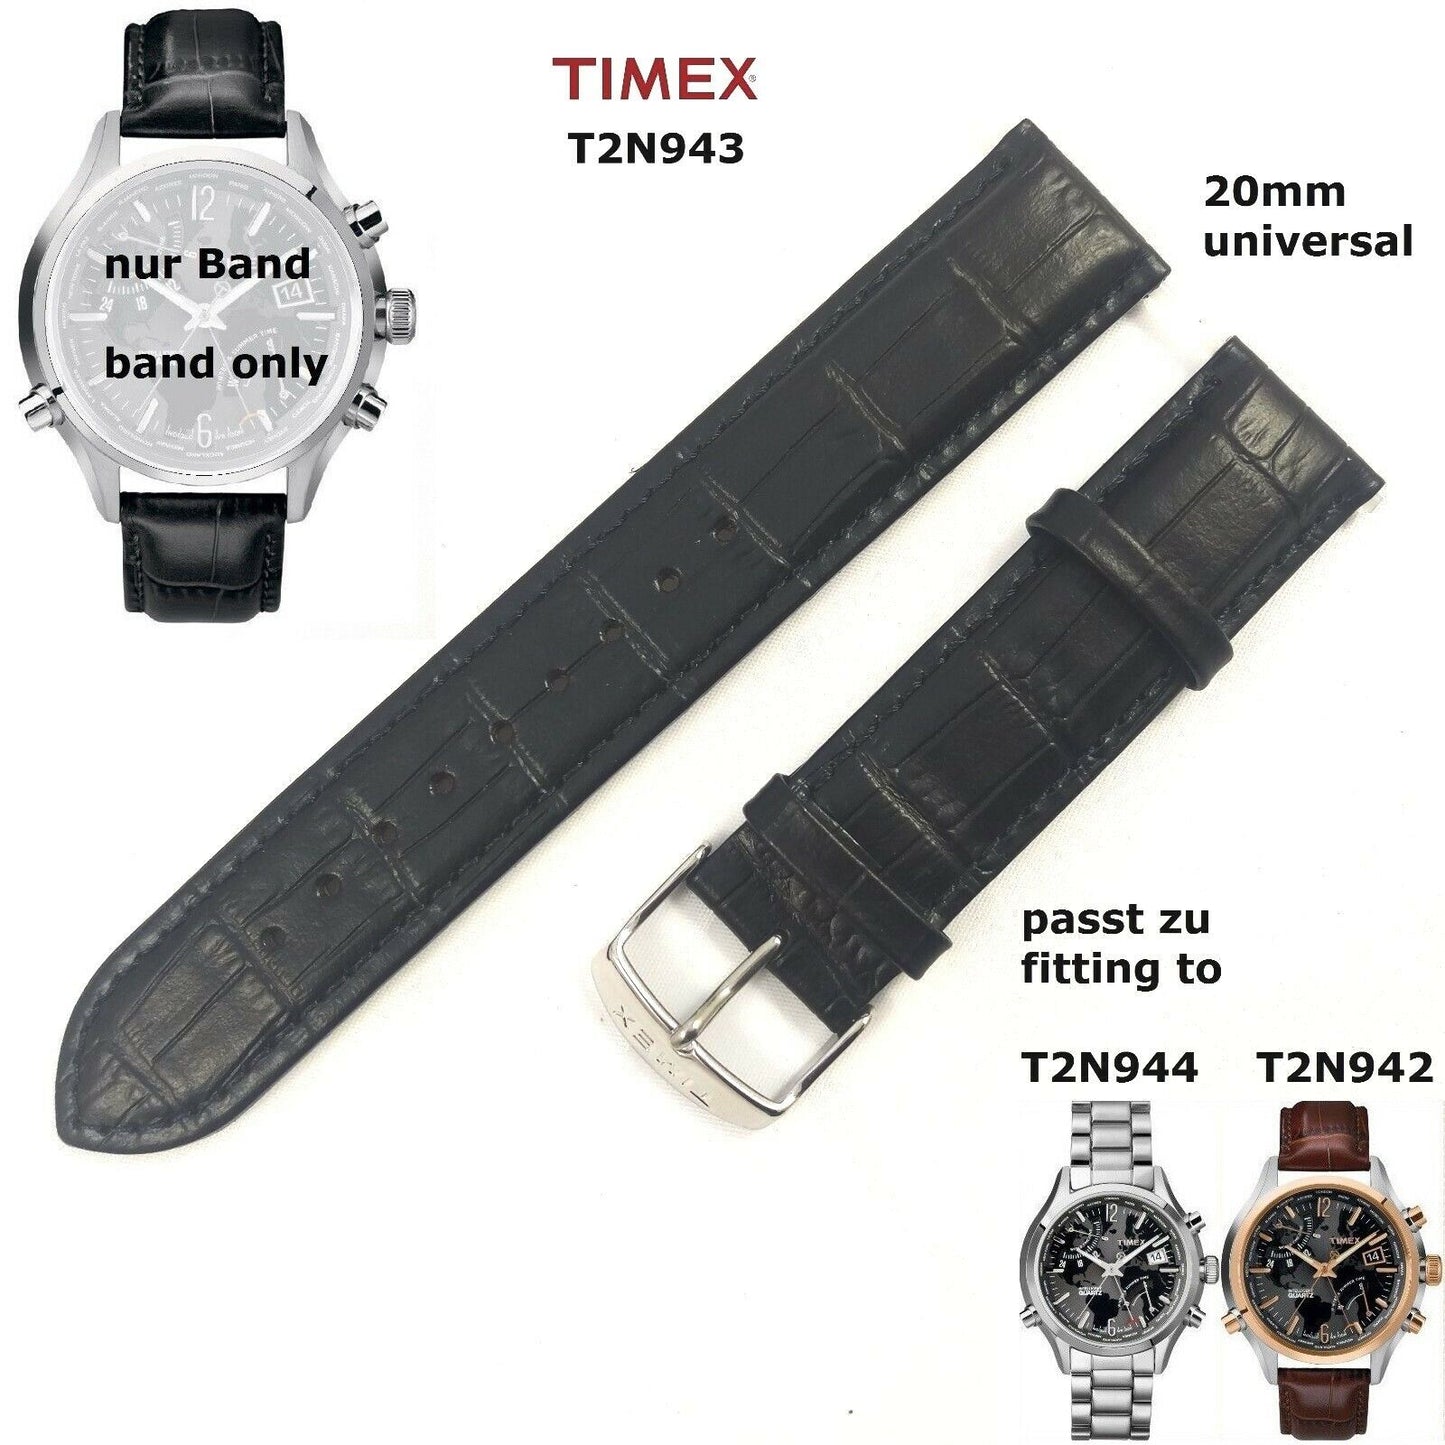 Timex Ersatzarmband T2N943 World Time - 20mm universal - passt zu T2N944 T2N942